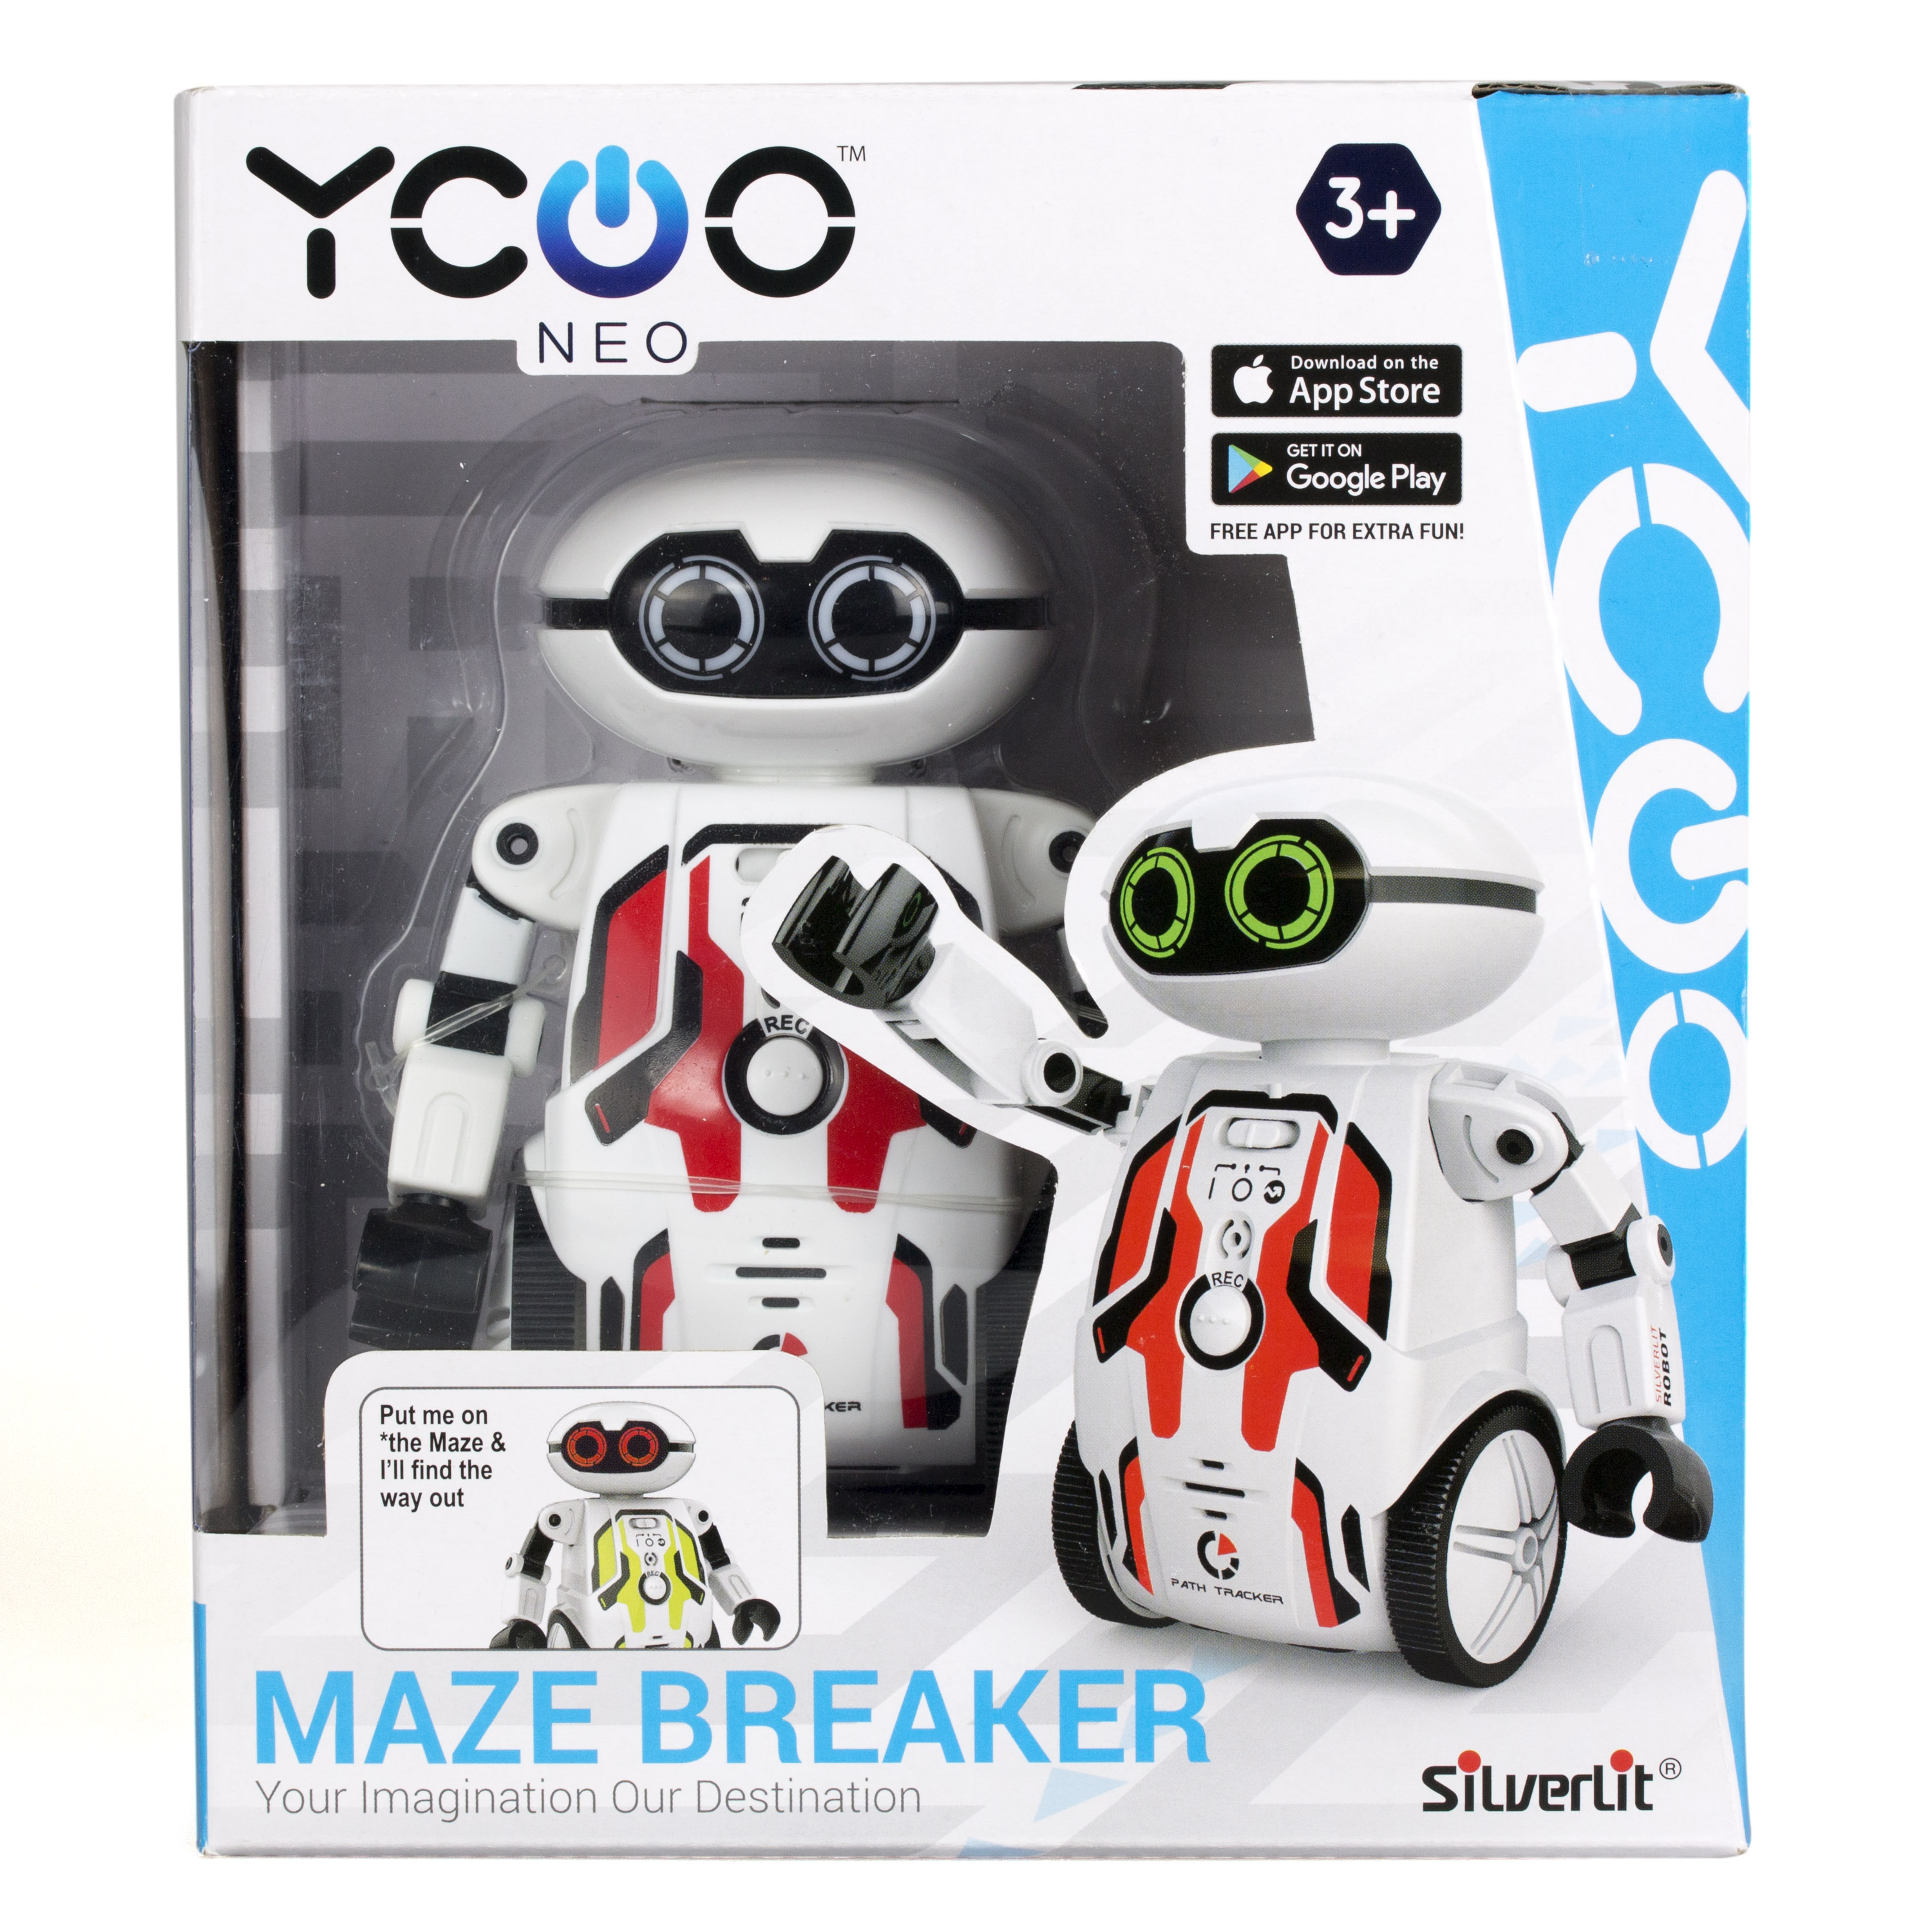 Silverlit Робот 88044-3 Мэйз брейкер красный (Maze Breaker) - Пенза 